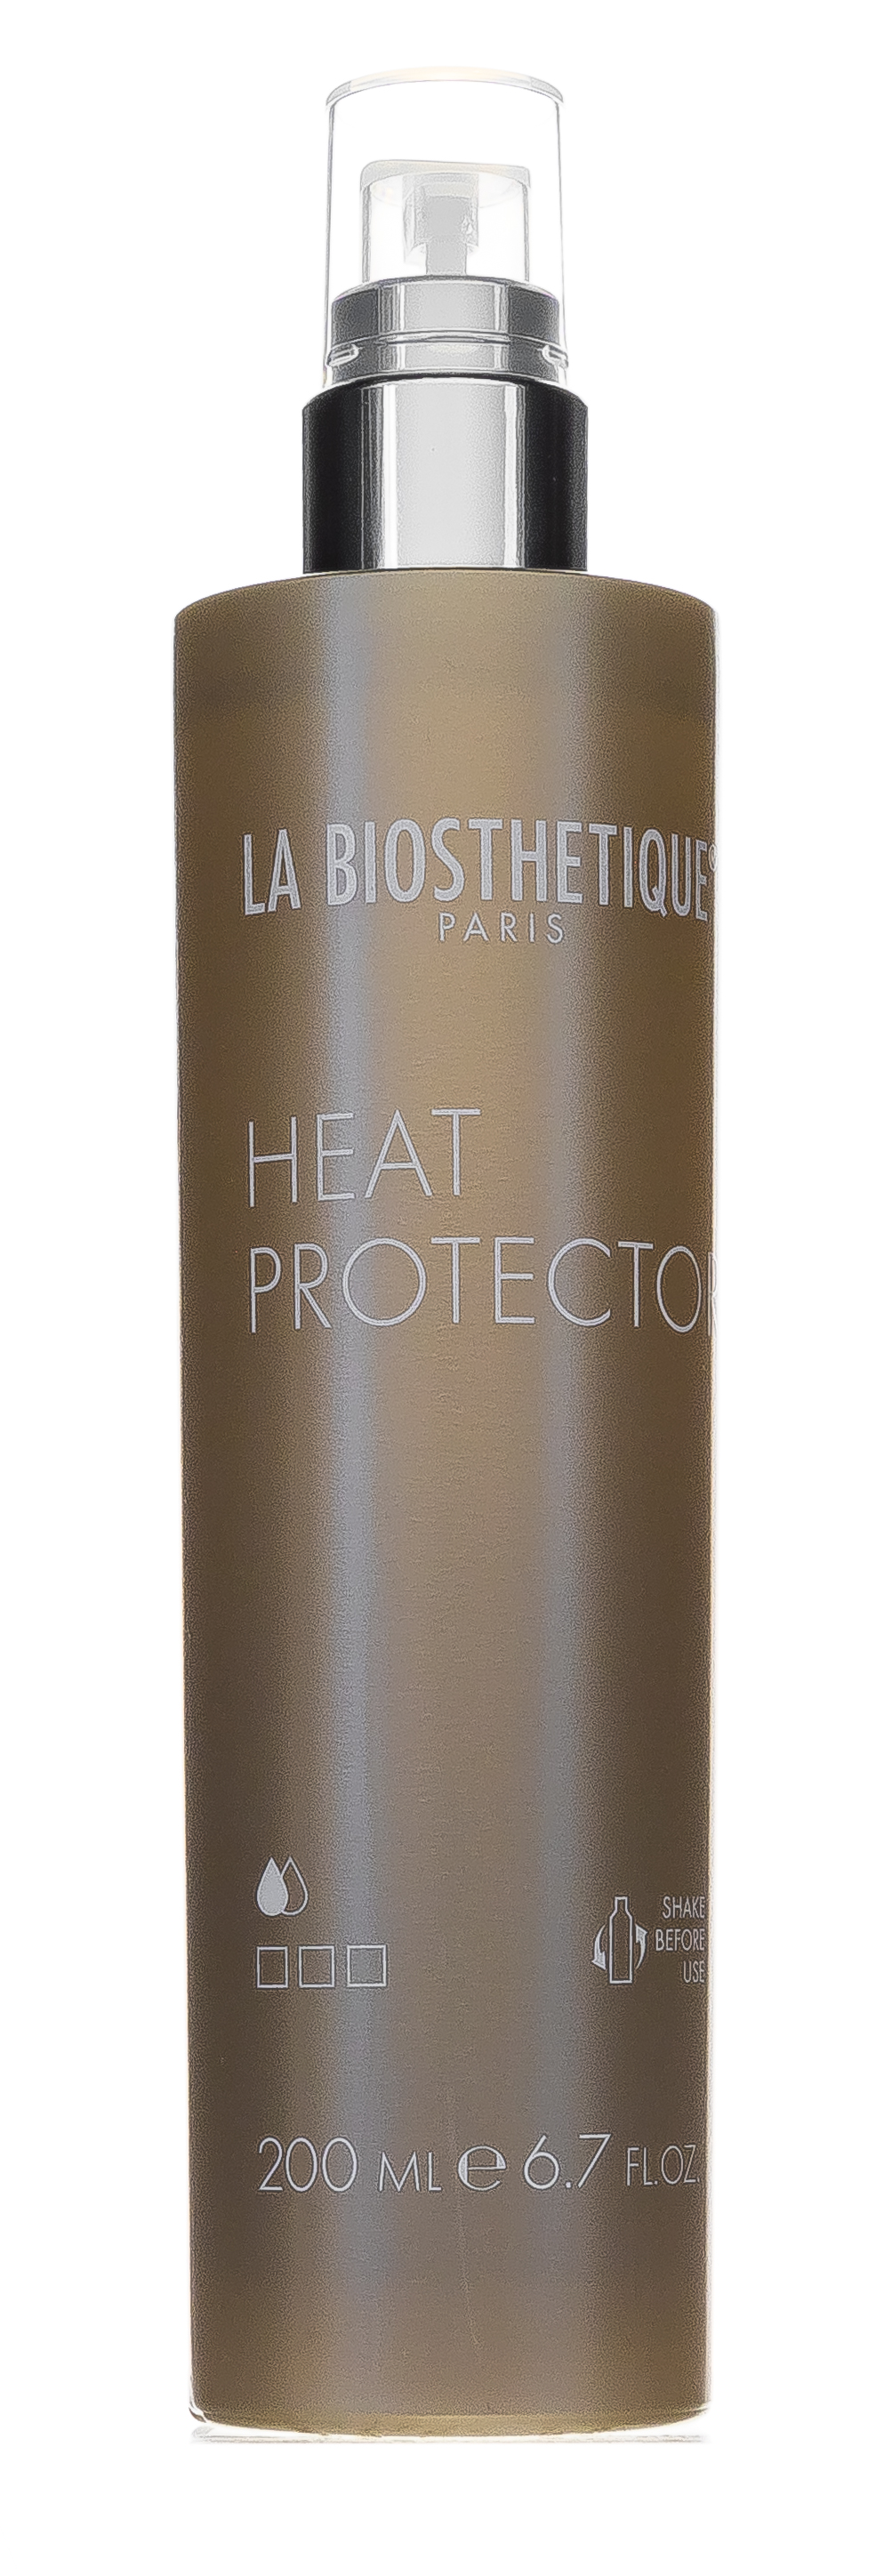 La Biosthetique Спрей для защиты волос от термовоздействия Heat Protector, 200 мл (La Biosthetique, Style)